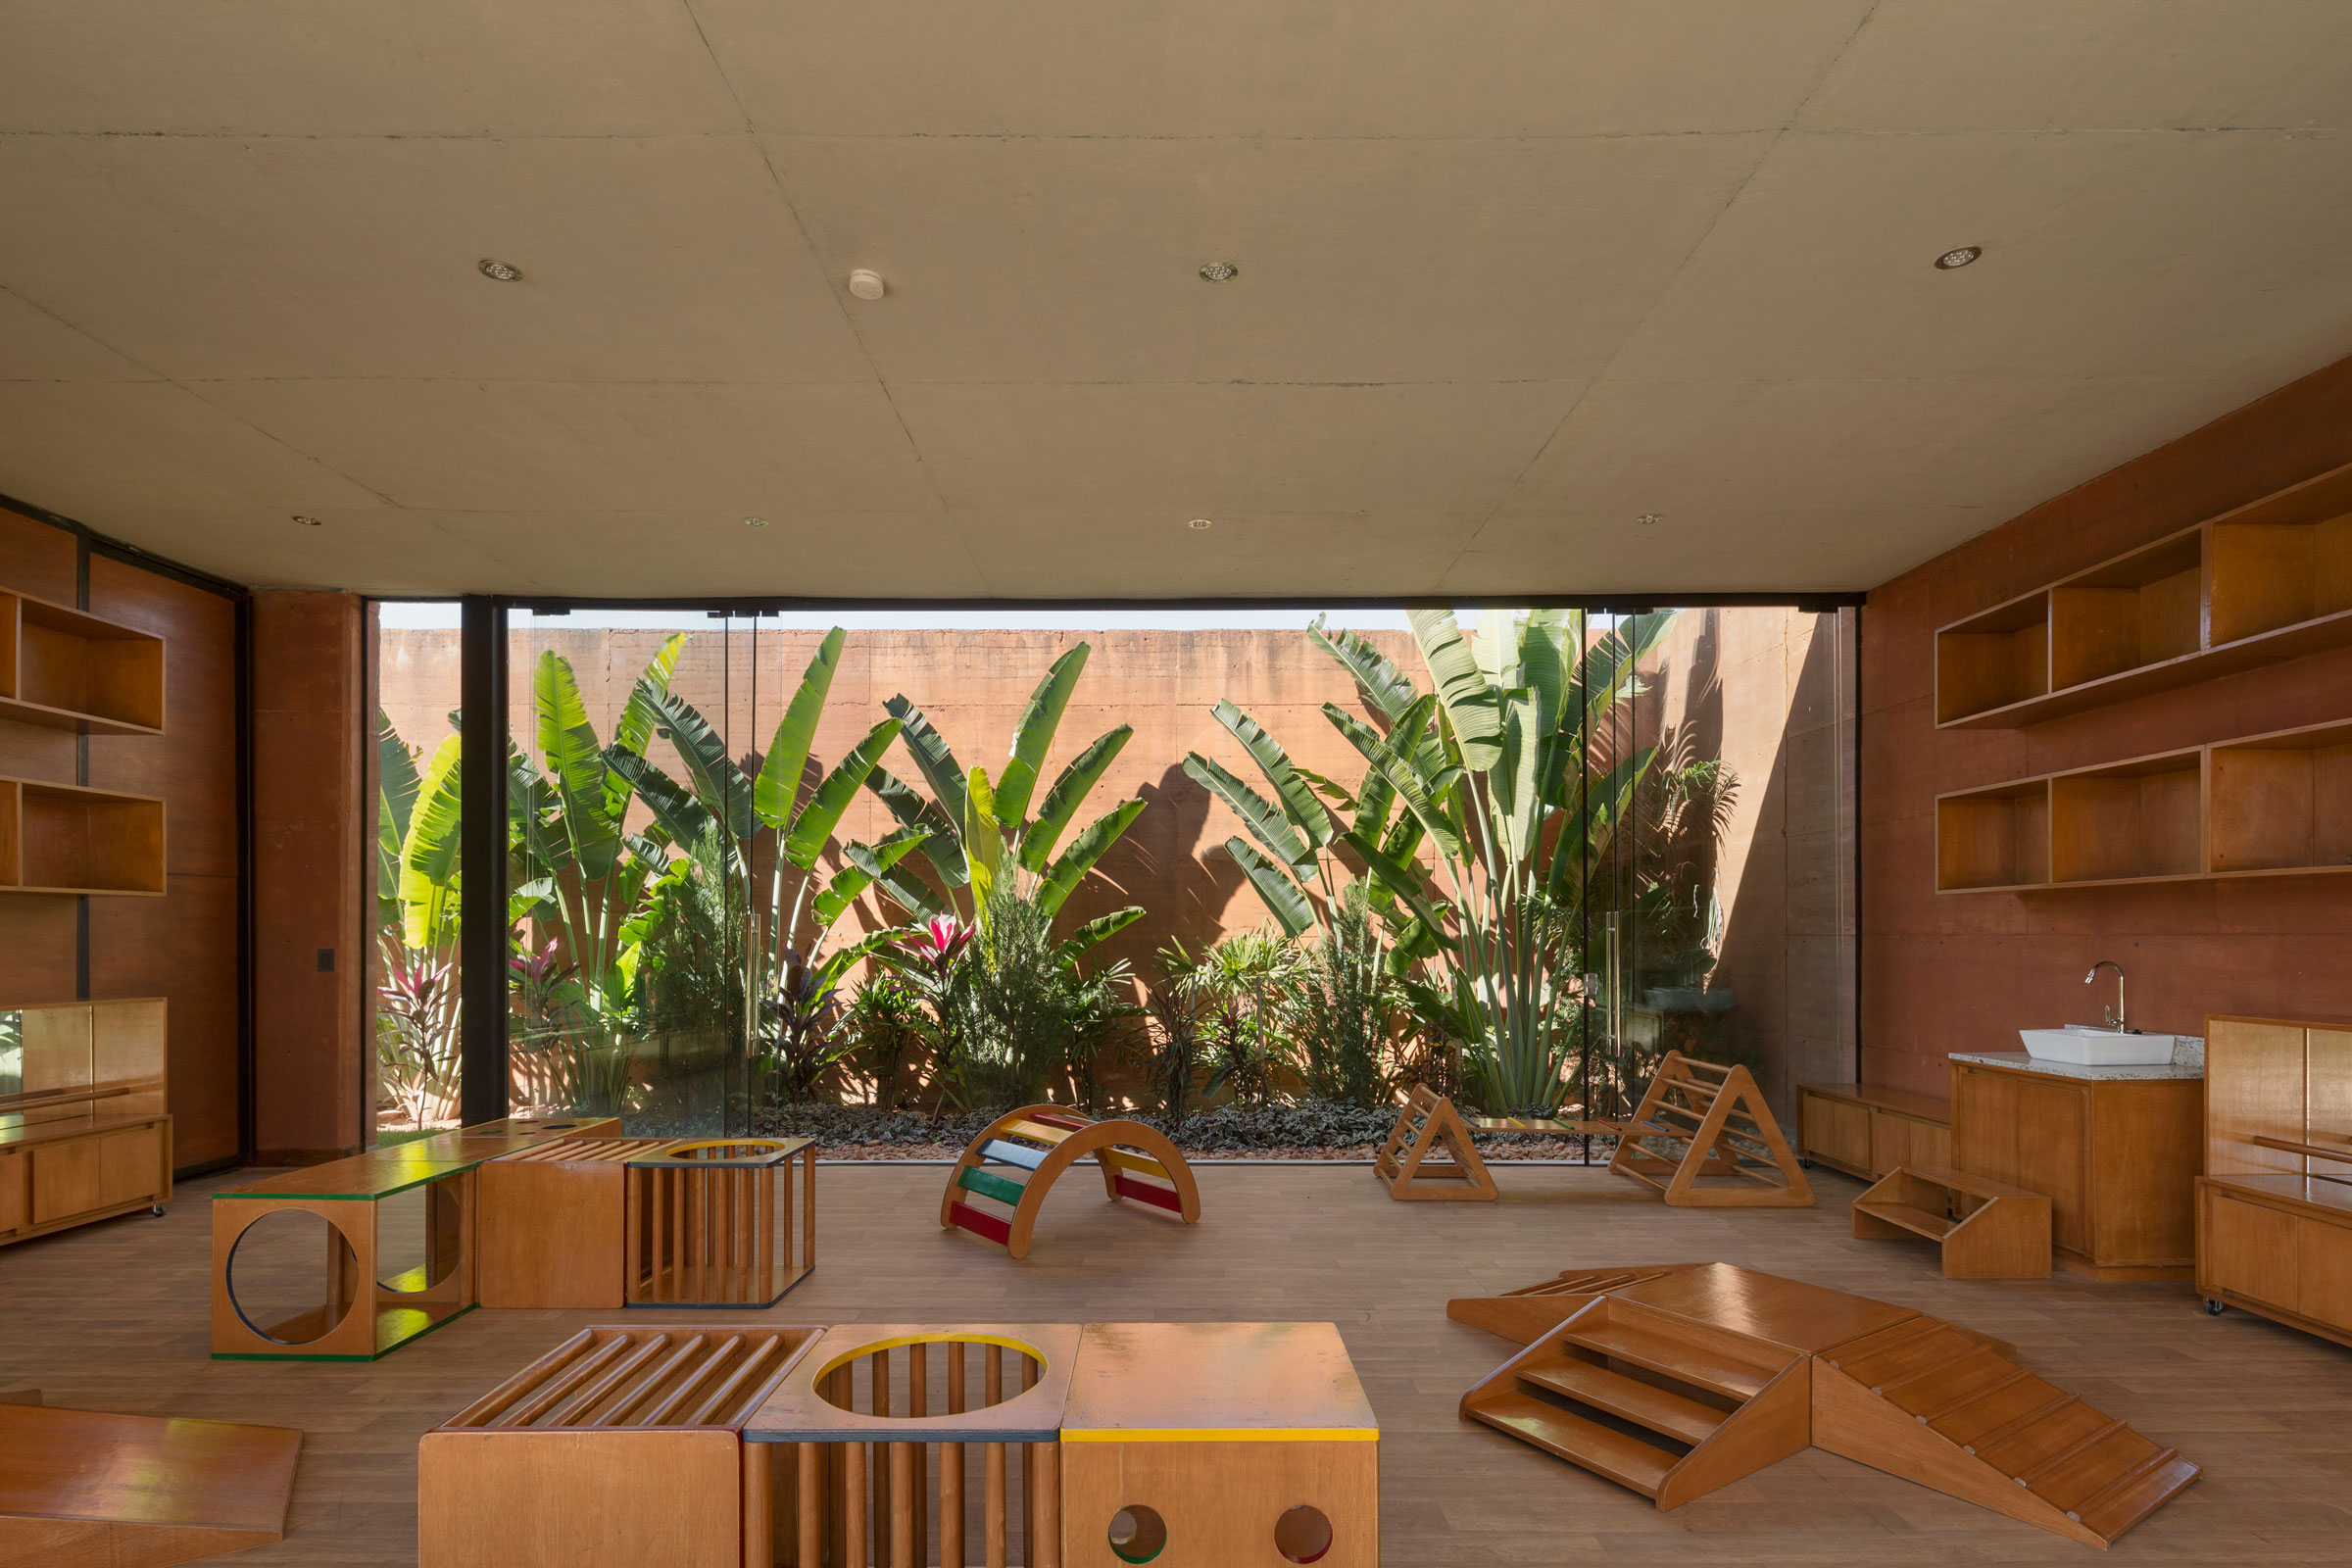 Equipo de Arquitectura Uses Biophilia for an Unexpected Classroom Design